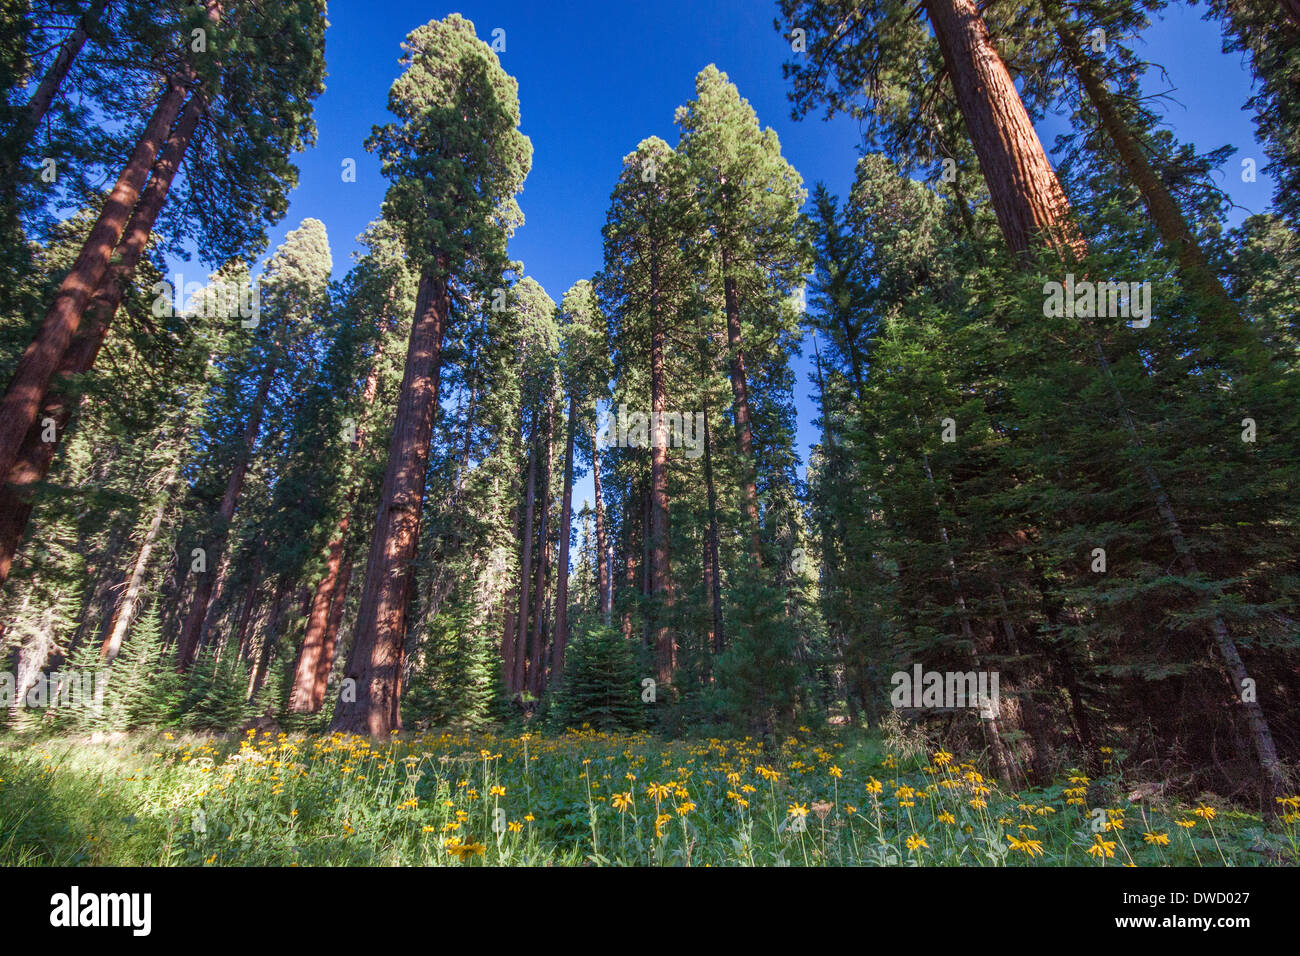 Impressive grove of giants in beautiful Sequoia National Park Stock Photo